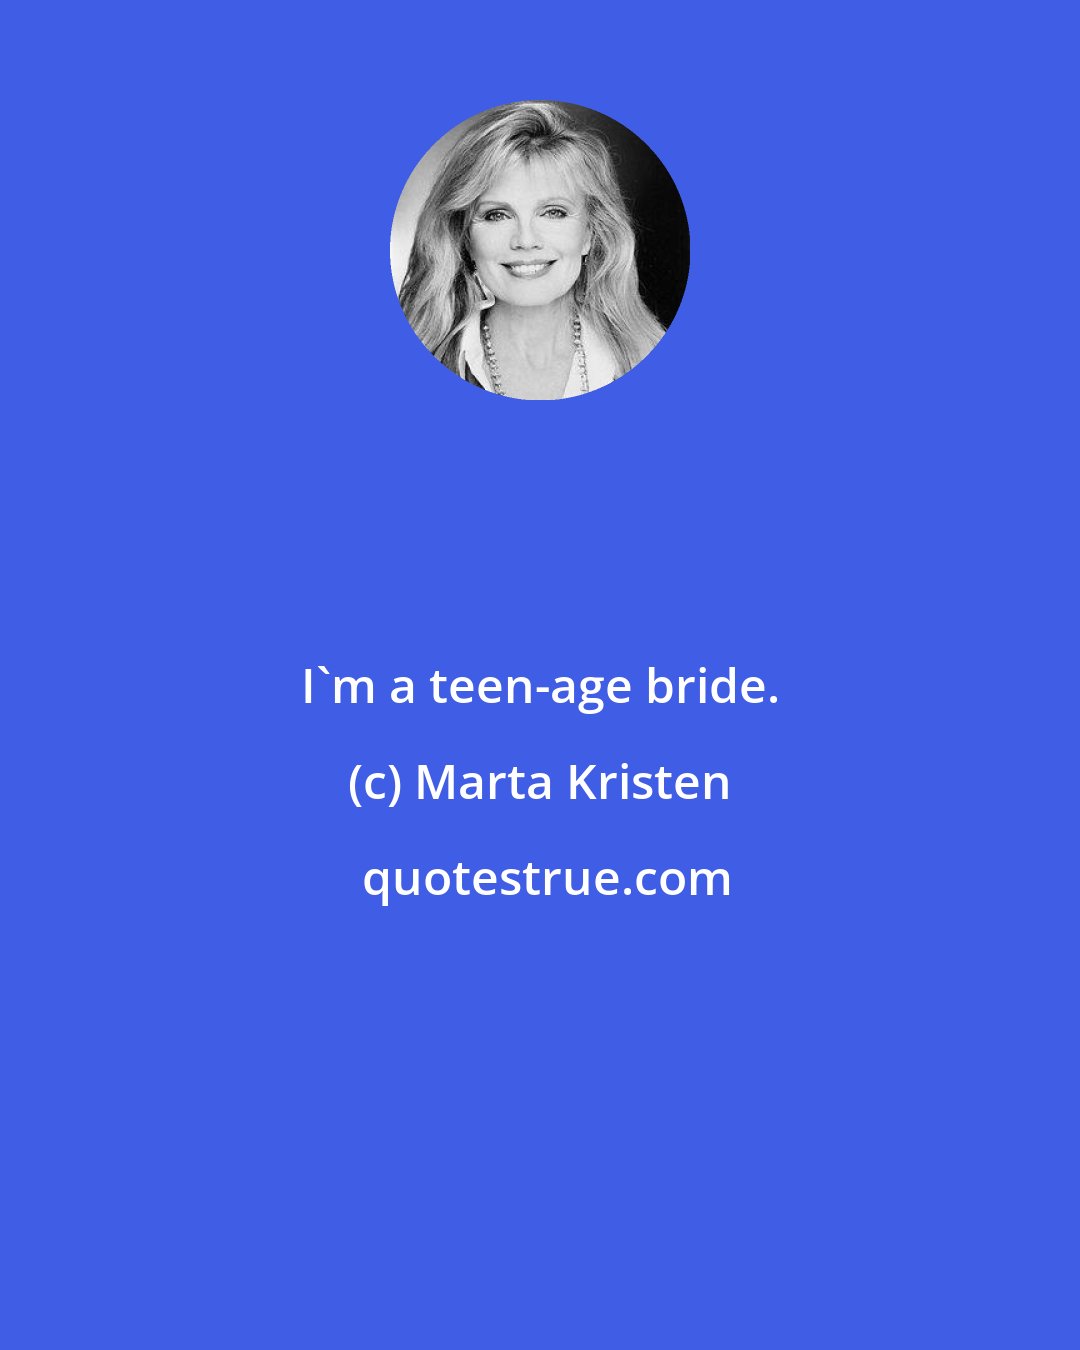 Marta Kristen: I'm a teen-age bride.